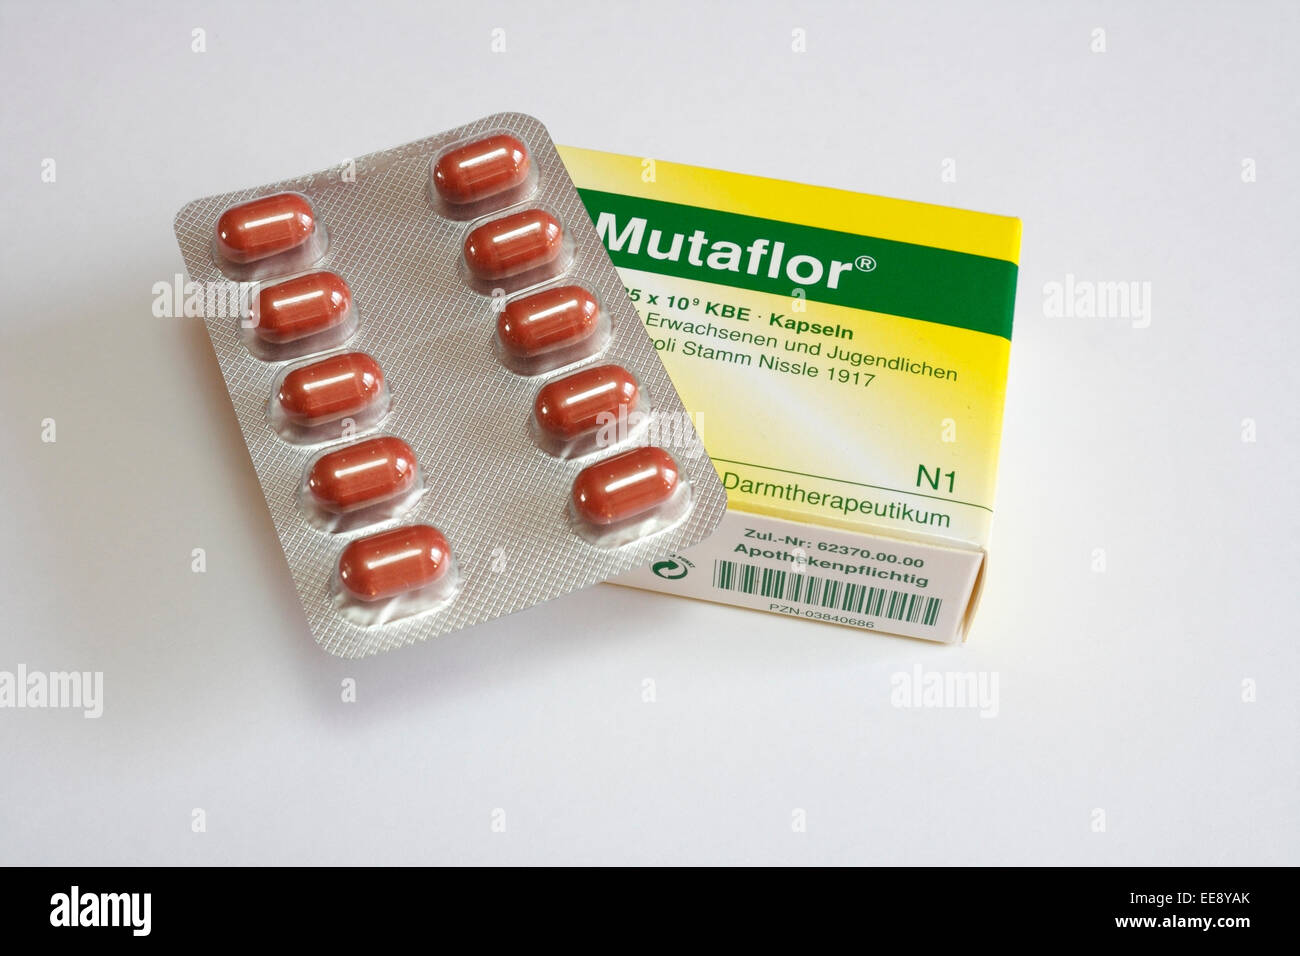 Mutaflor E Coli Nissle Probiotic tablets, digital image only Stock Photo